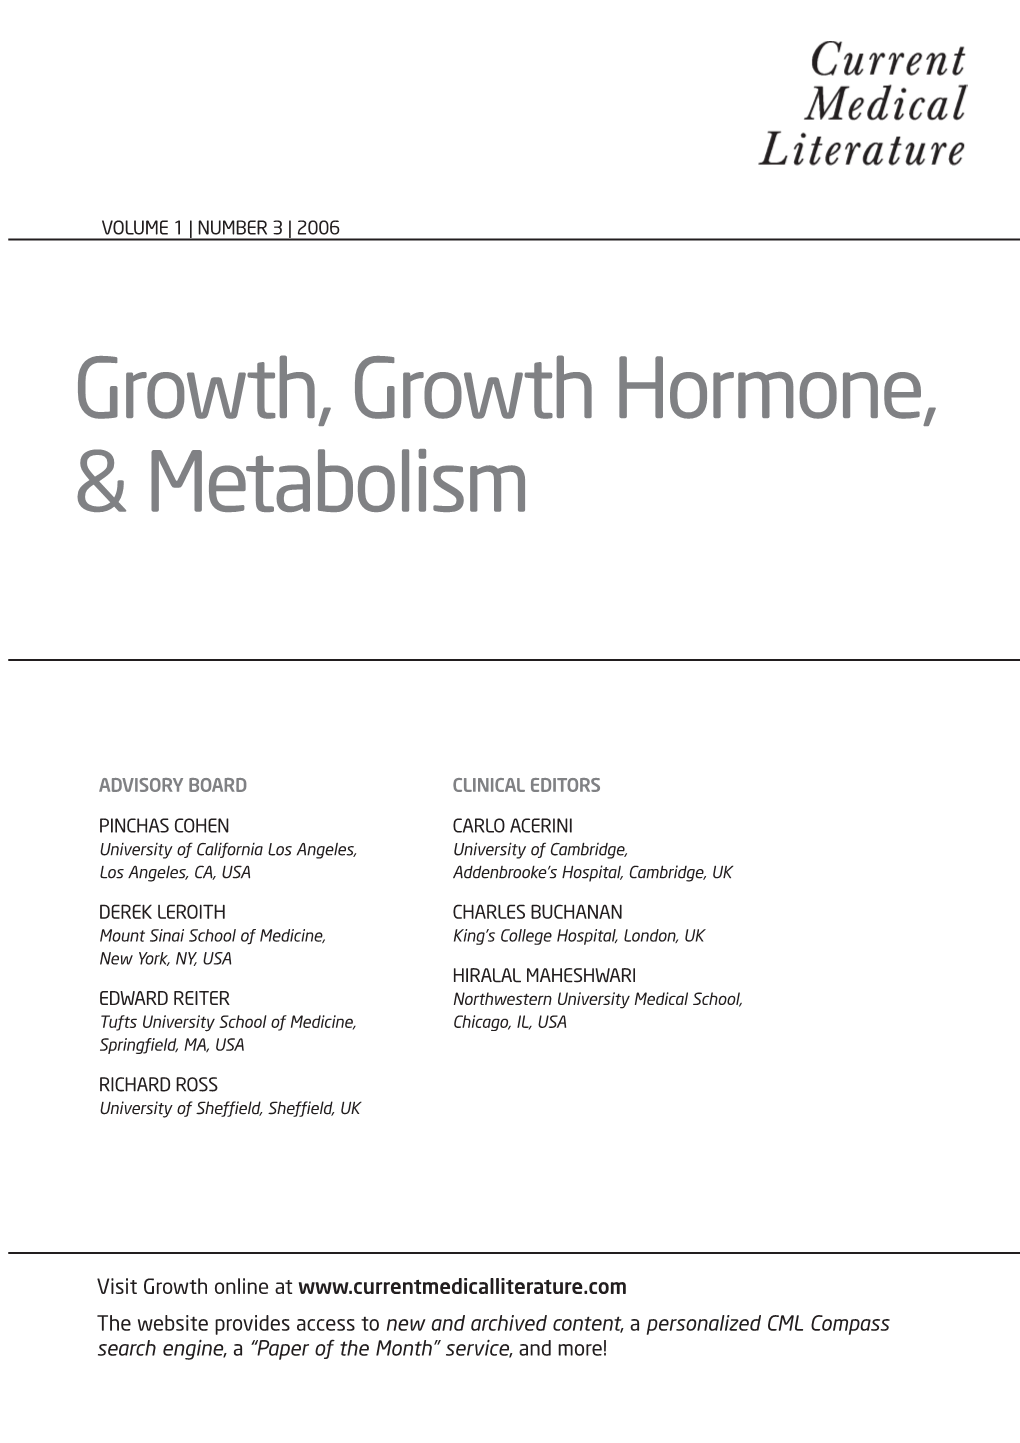 Growth, Growth Hormone, & Metabolism